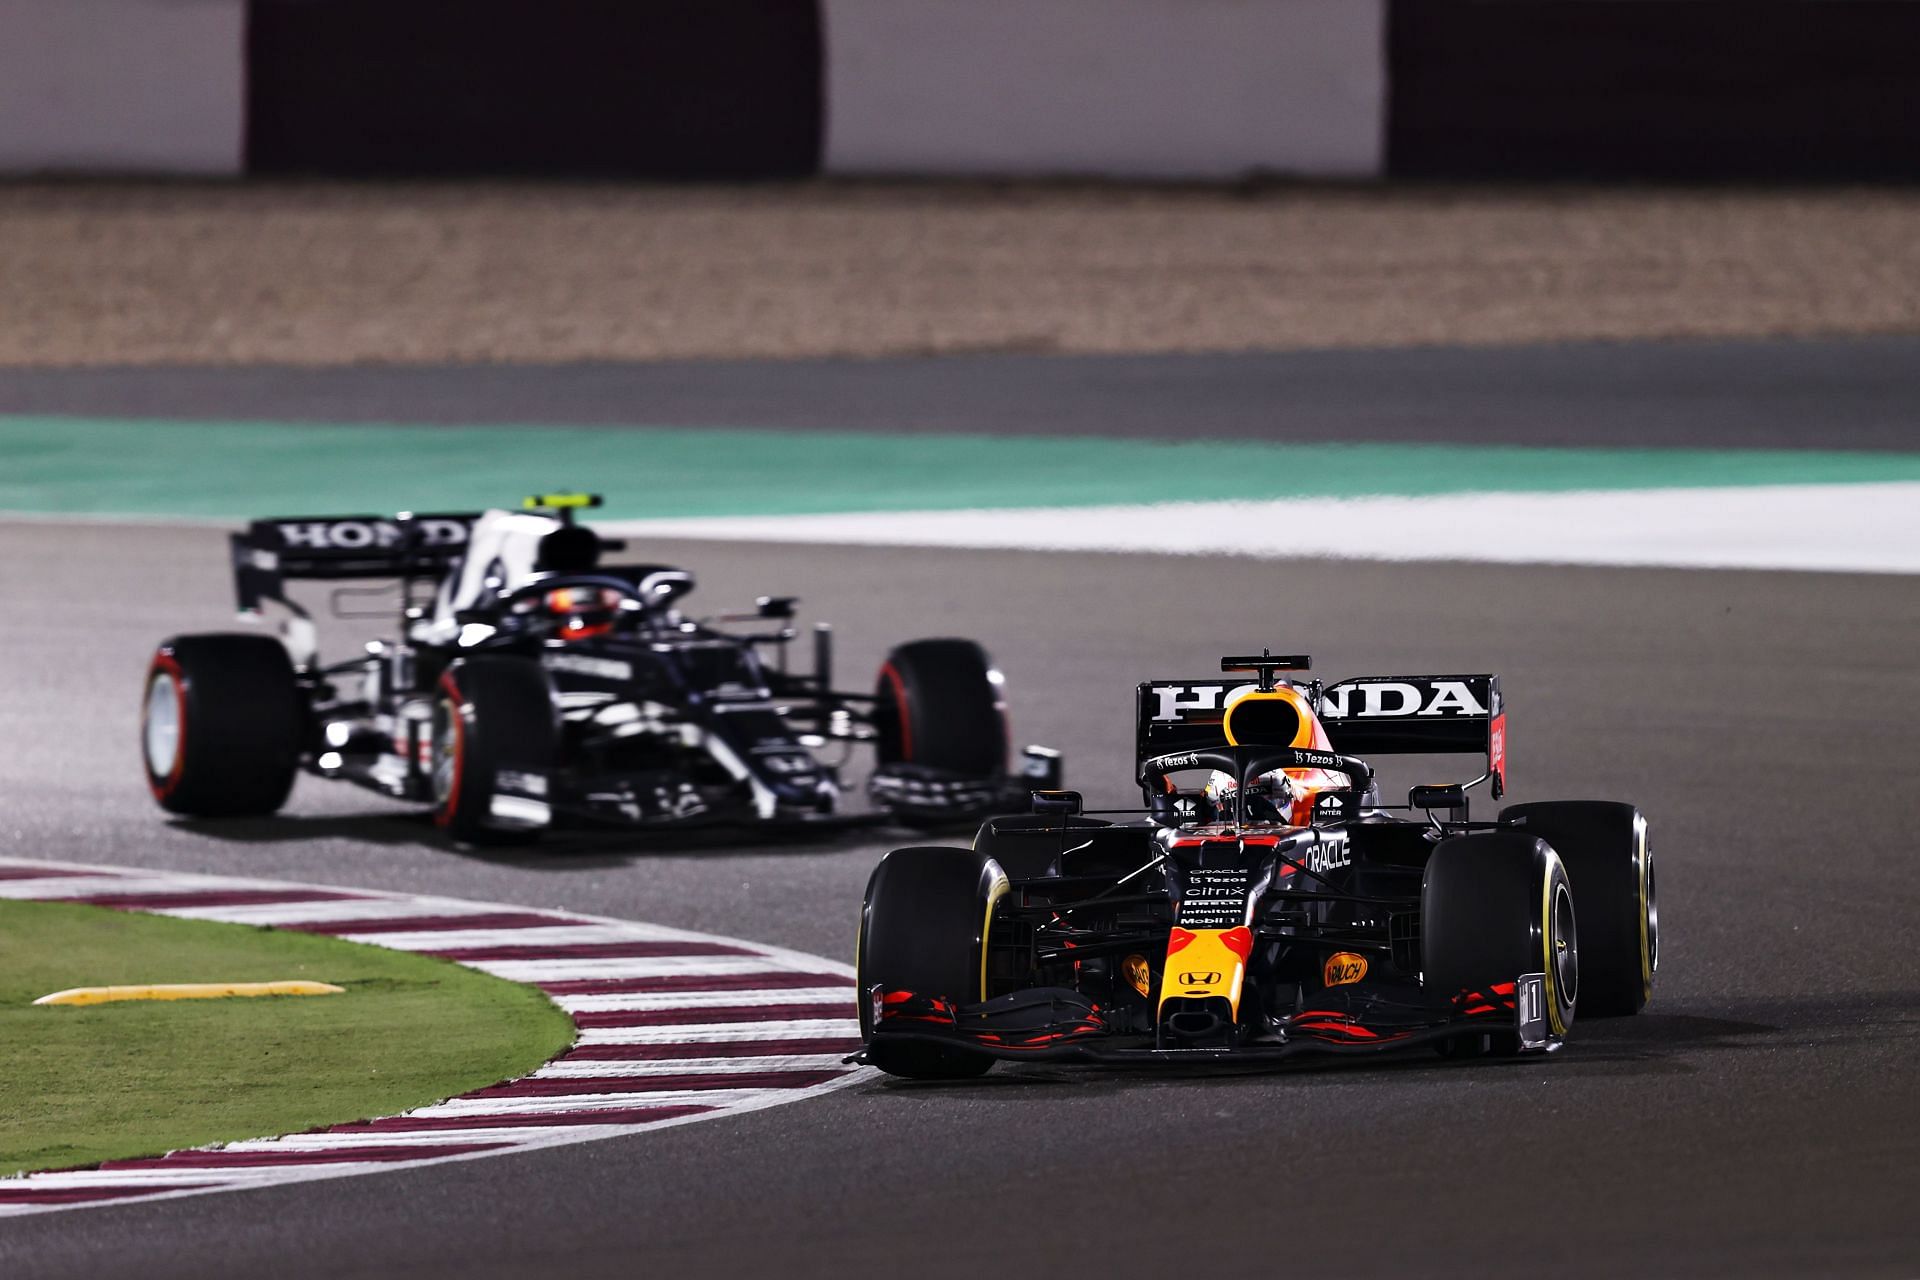 F1 Grand Prix of Qatar - Max Verstappen passes Pierre Gasly.